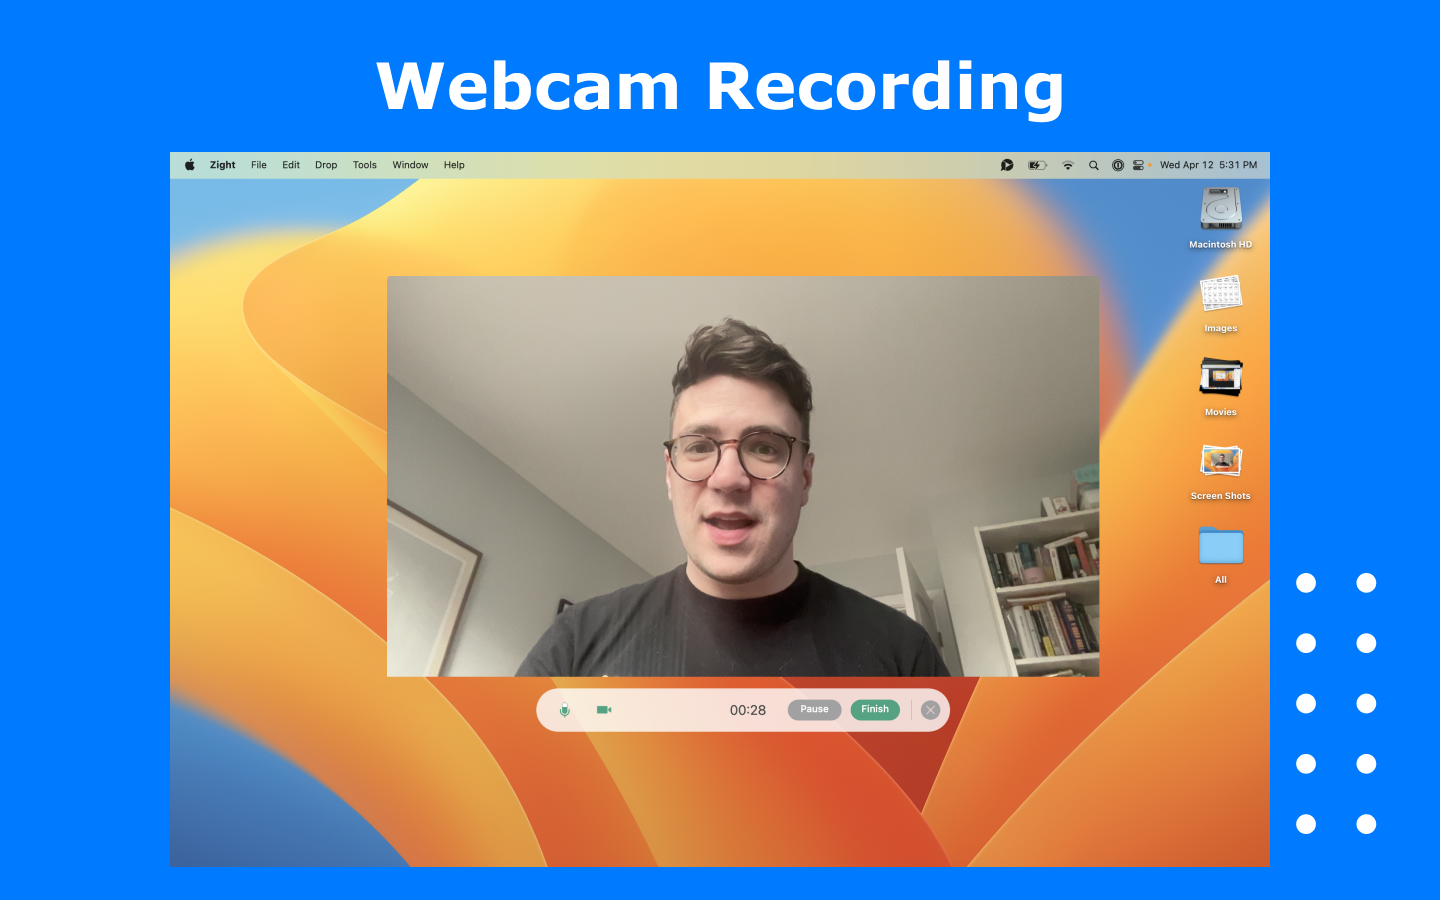 Webcam recording